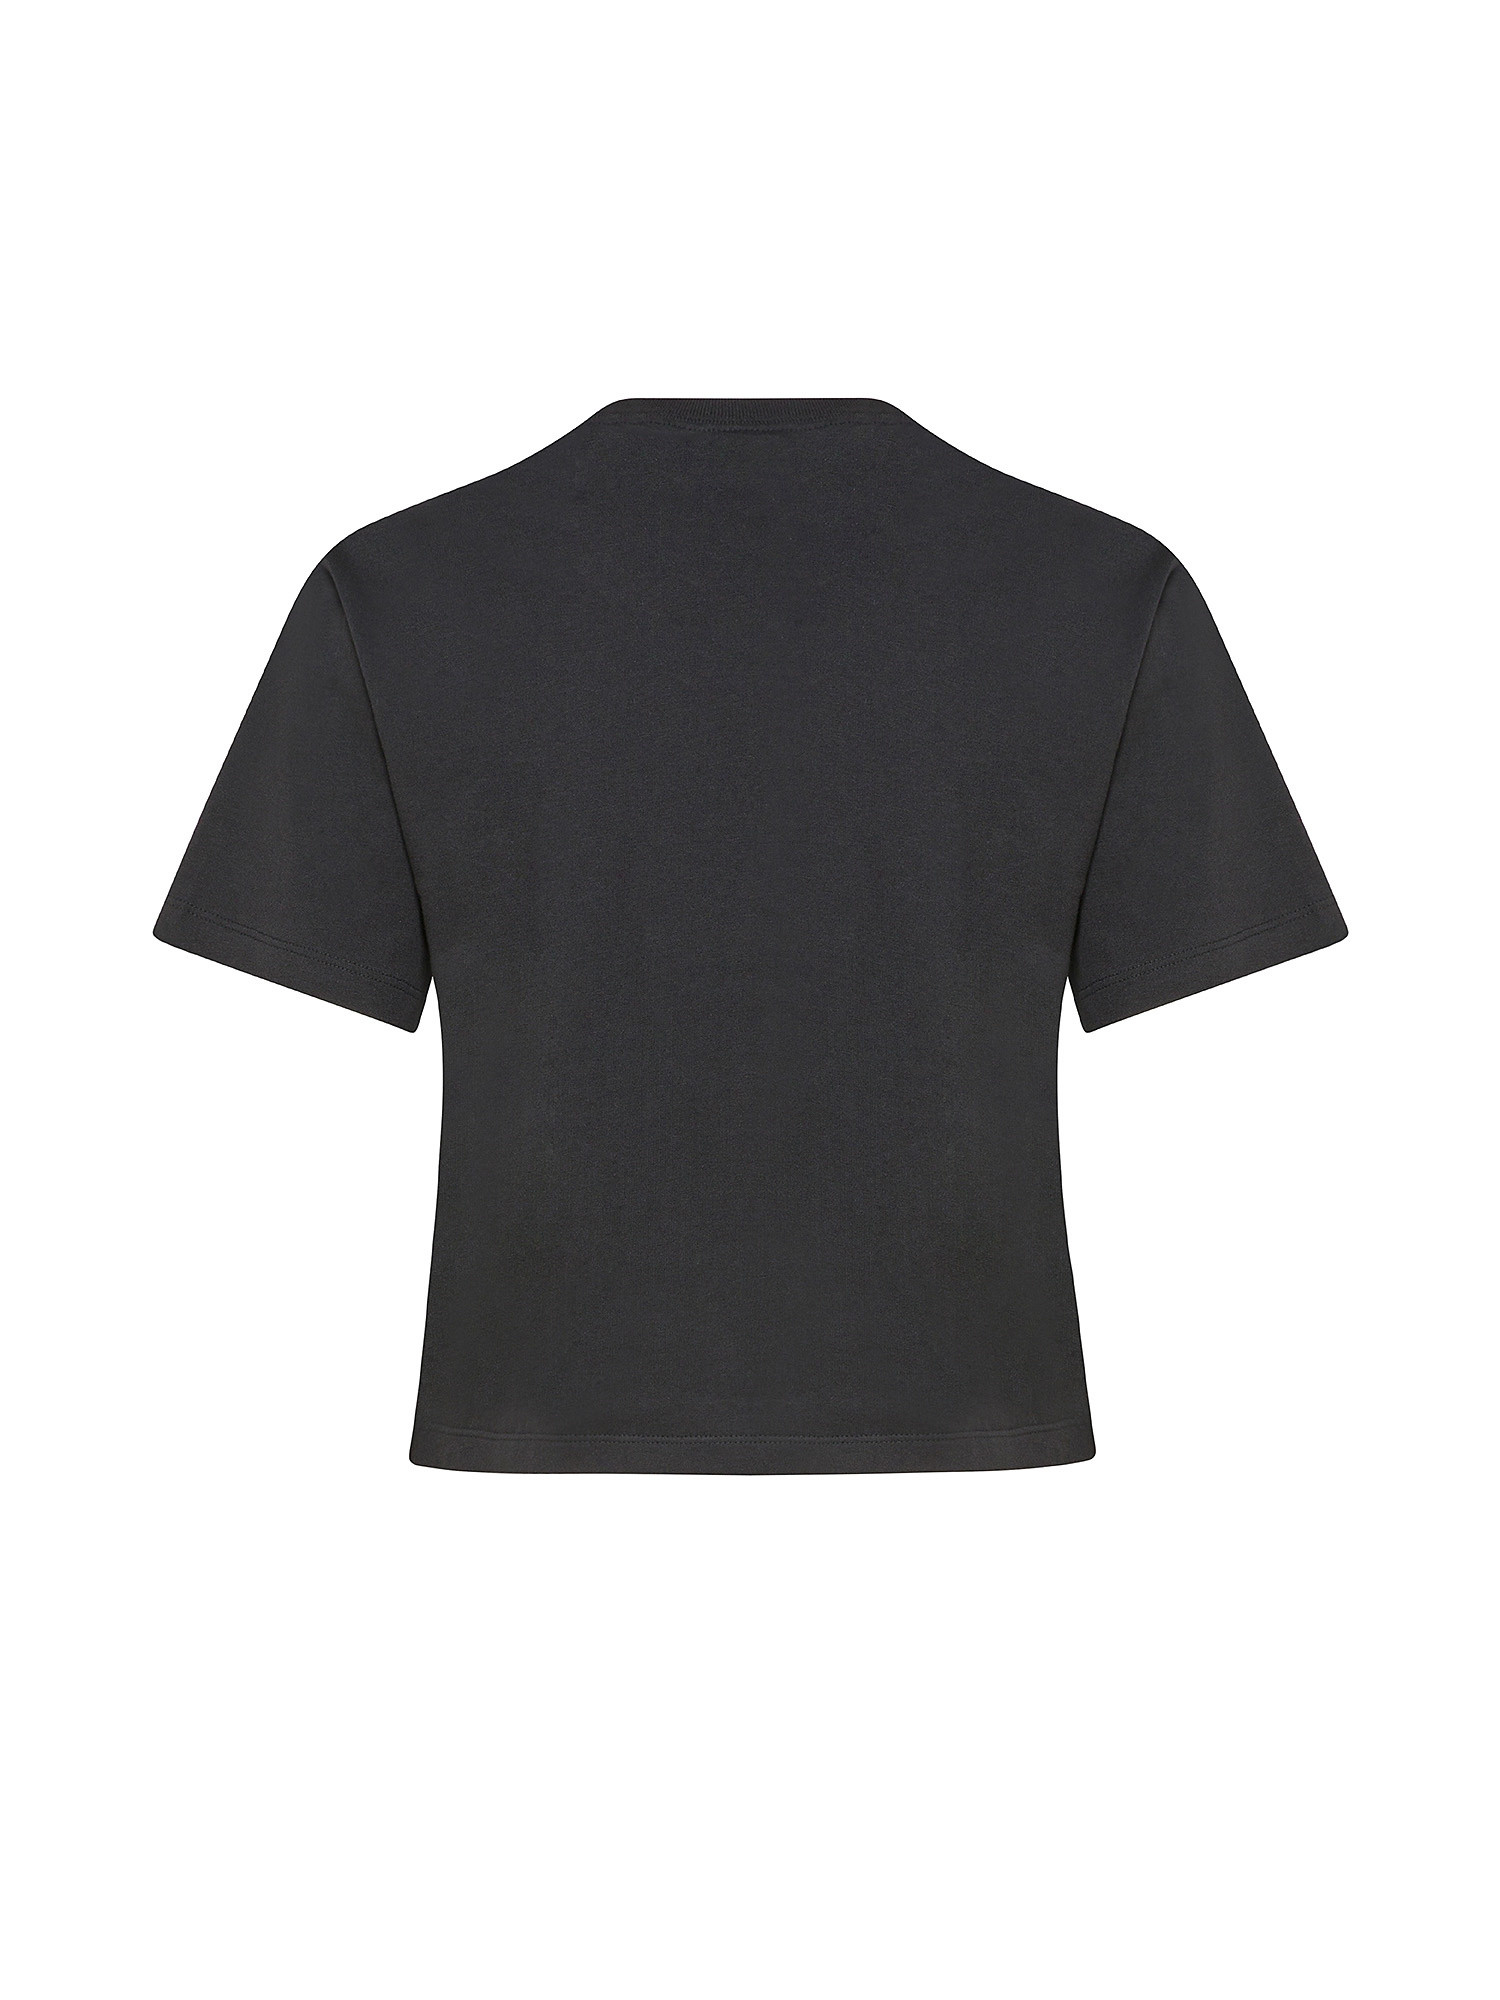 Adidas - T-shirt with logo, Black, large image number 1